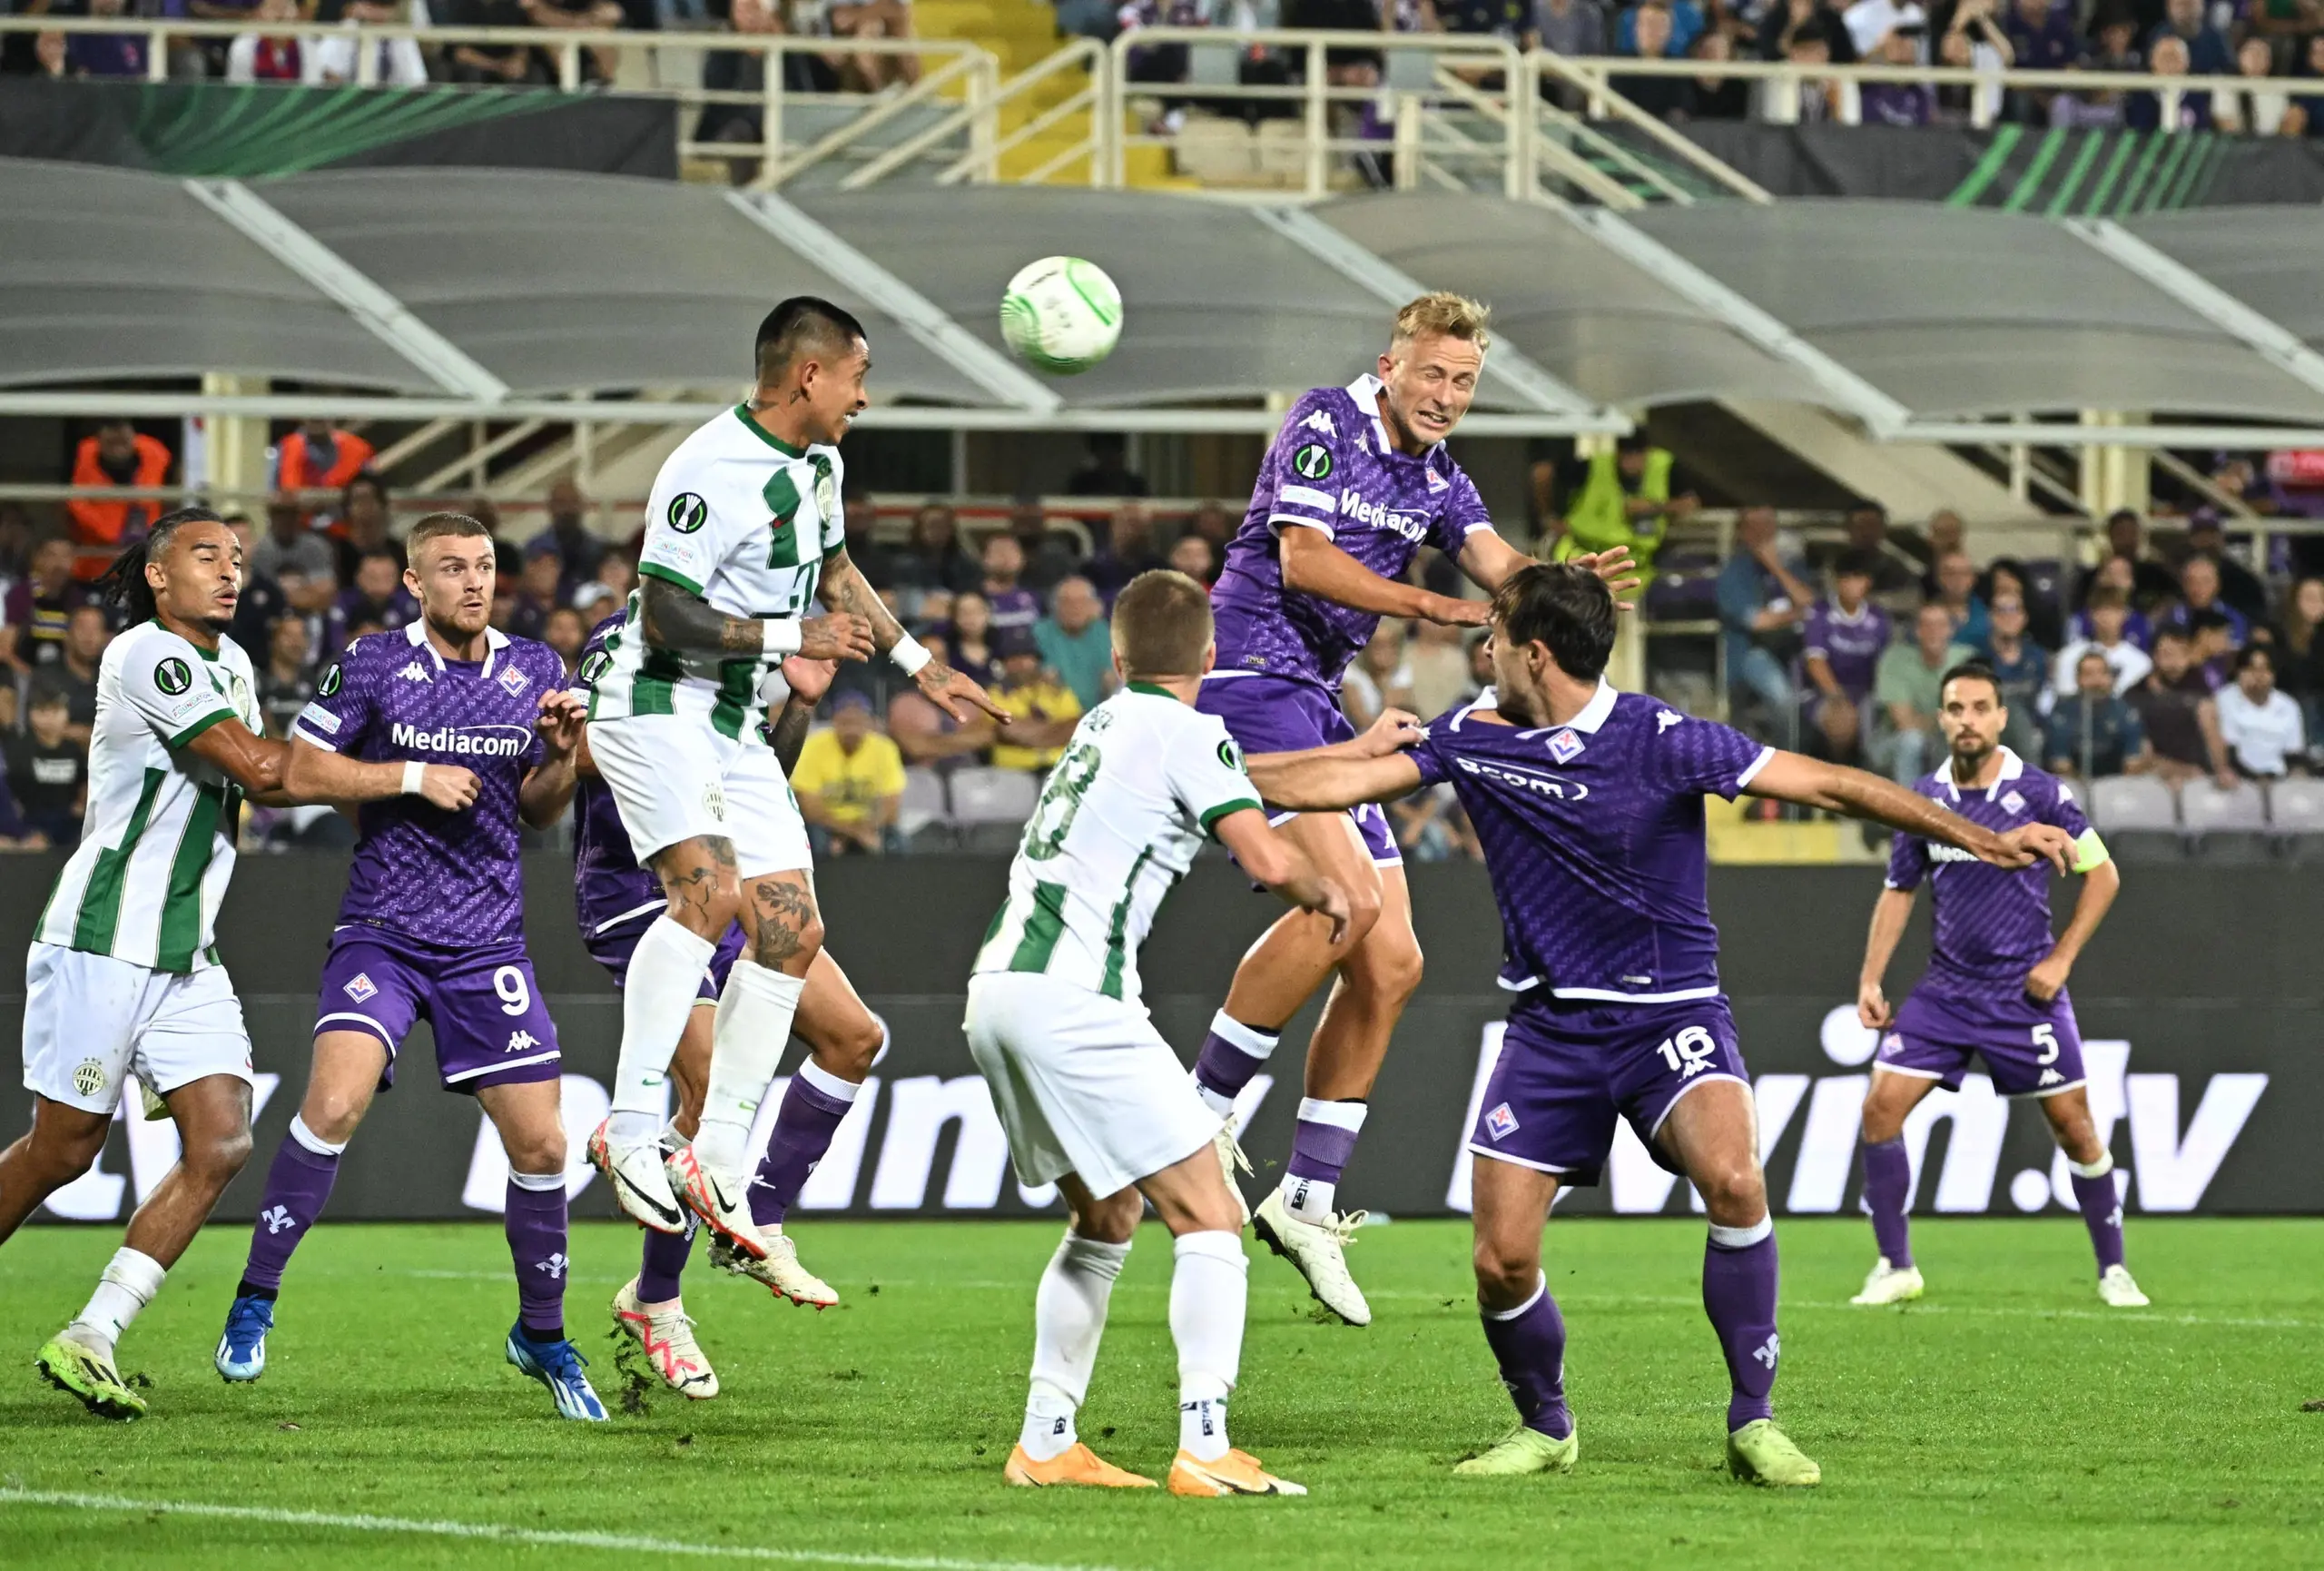 Fiorentina pega Ferencváros, Genk e Cukaricki na Conference